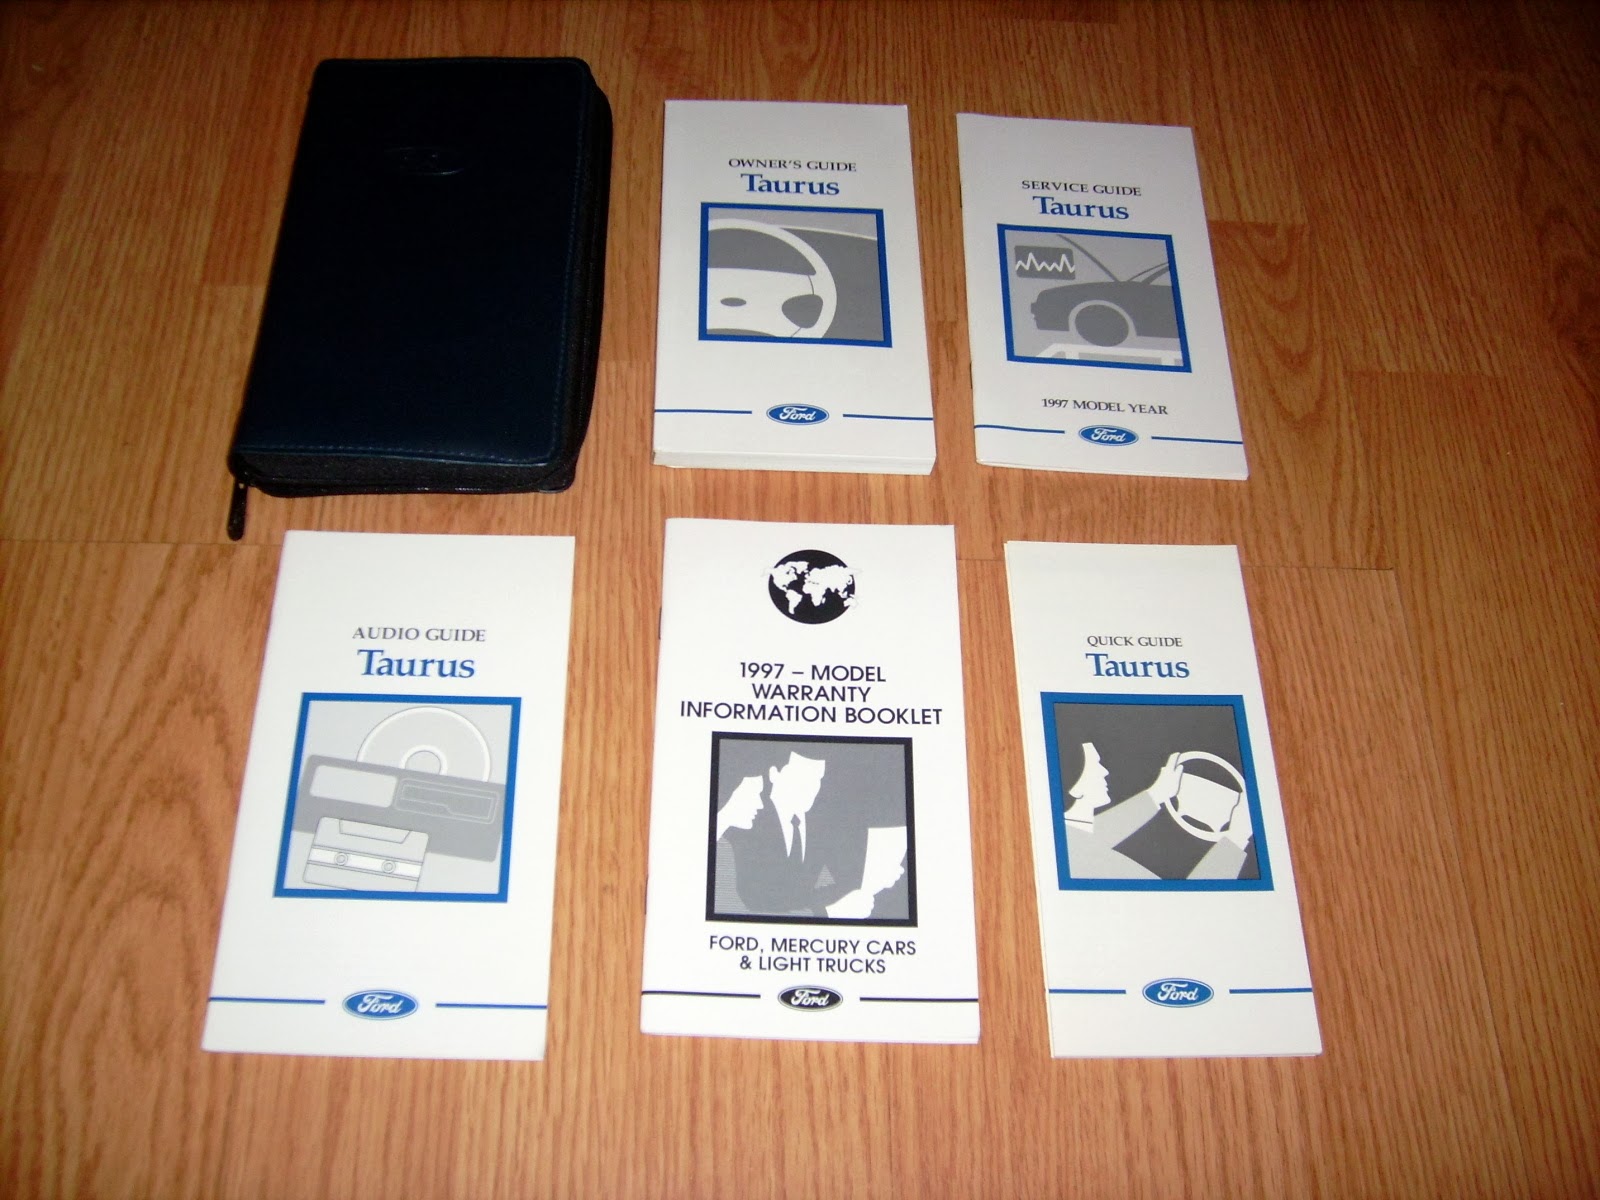 2005 Ford taurus owners manual pdf